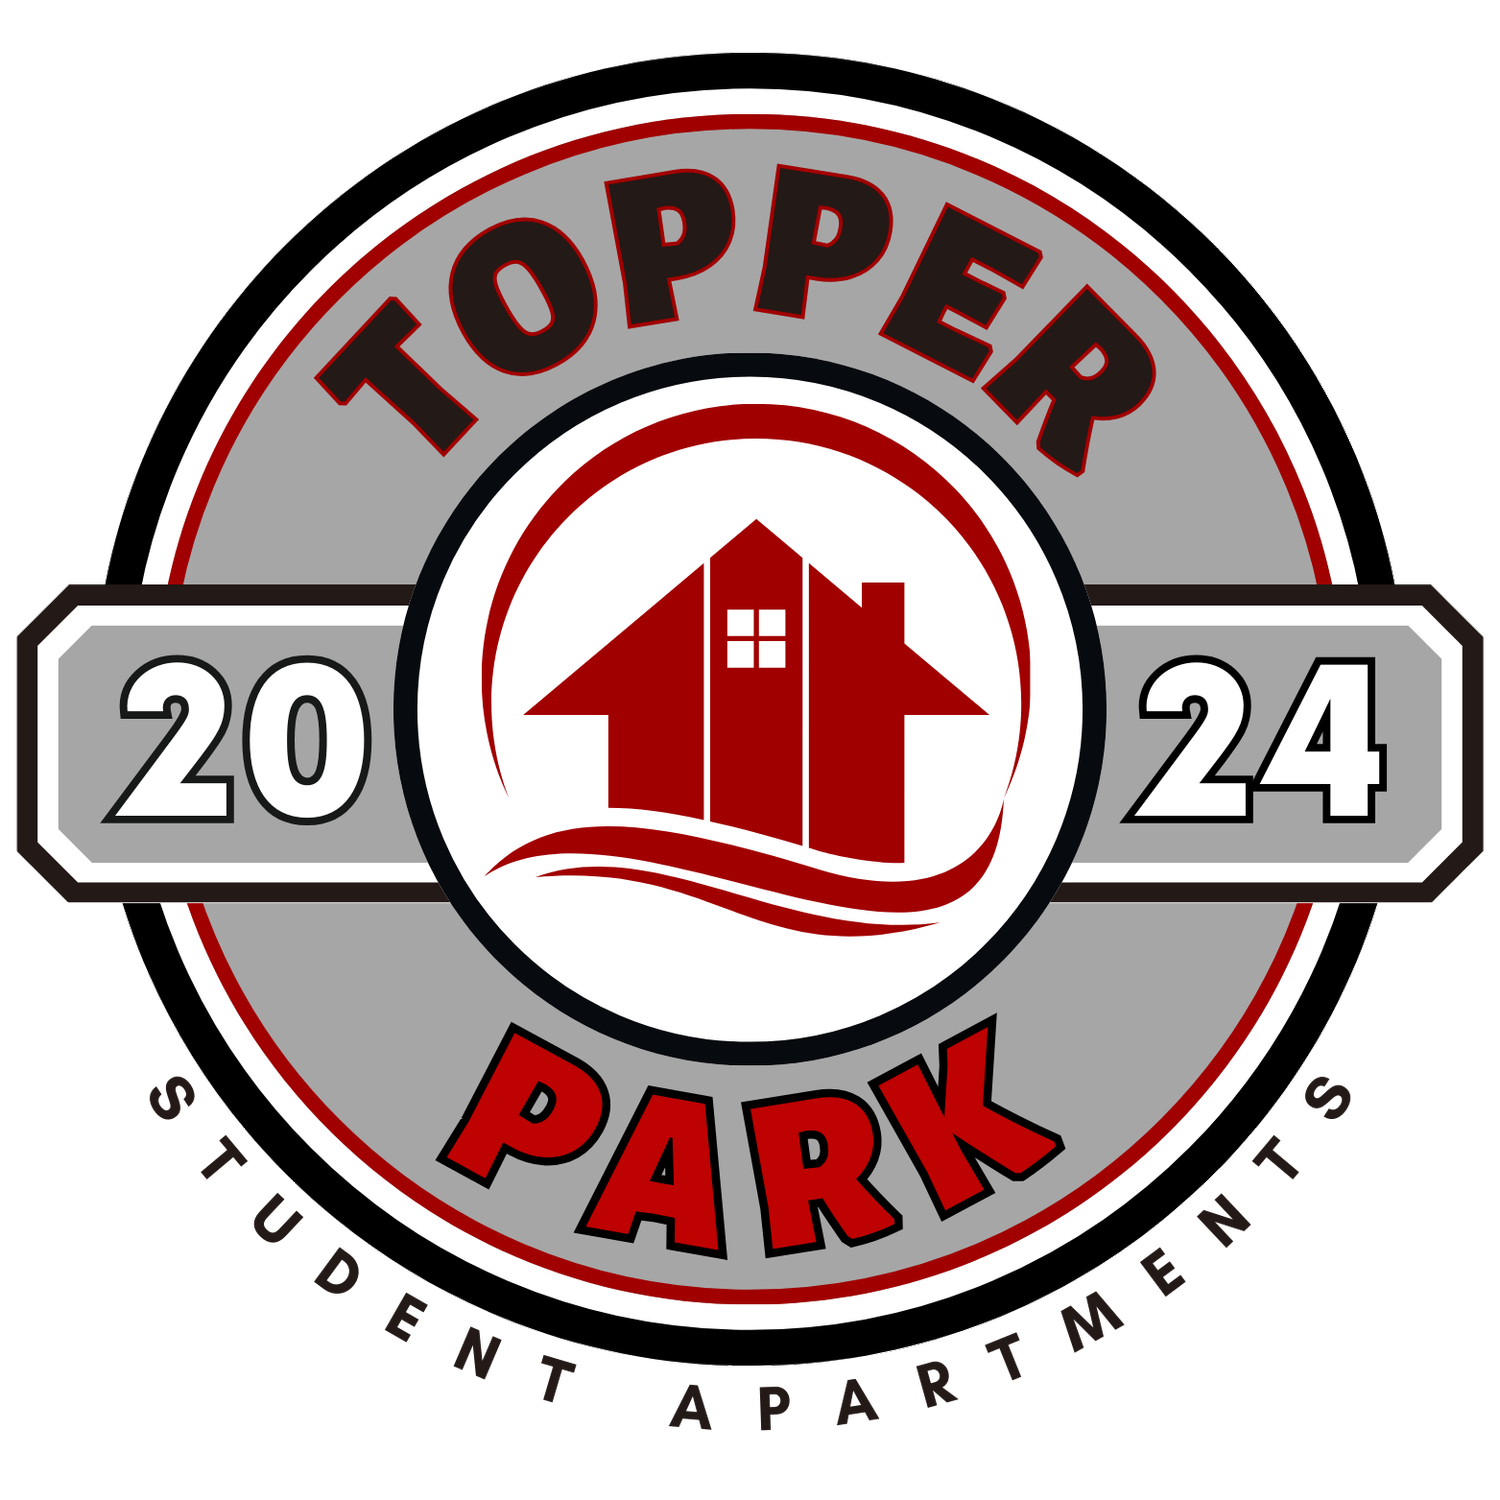 Topper Park